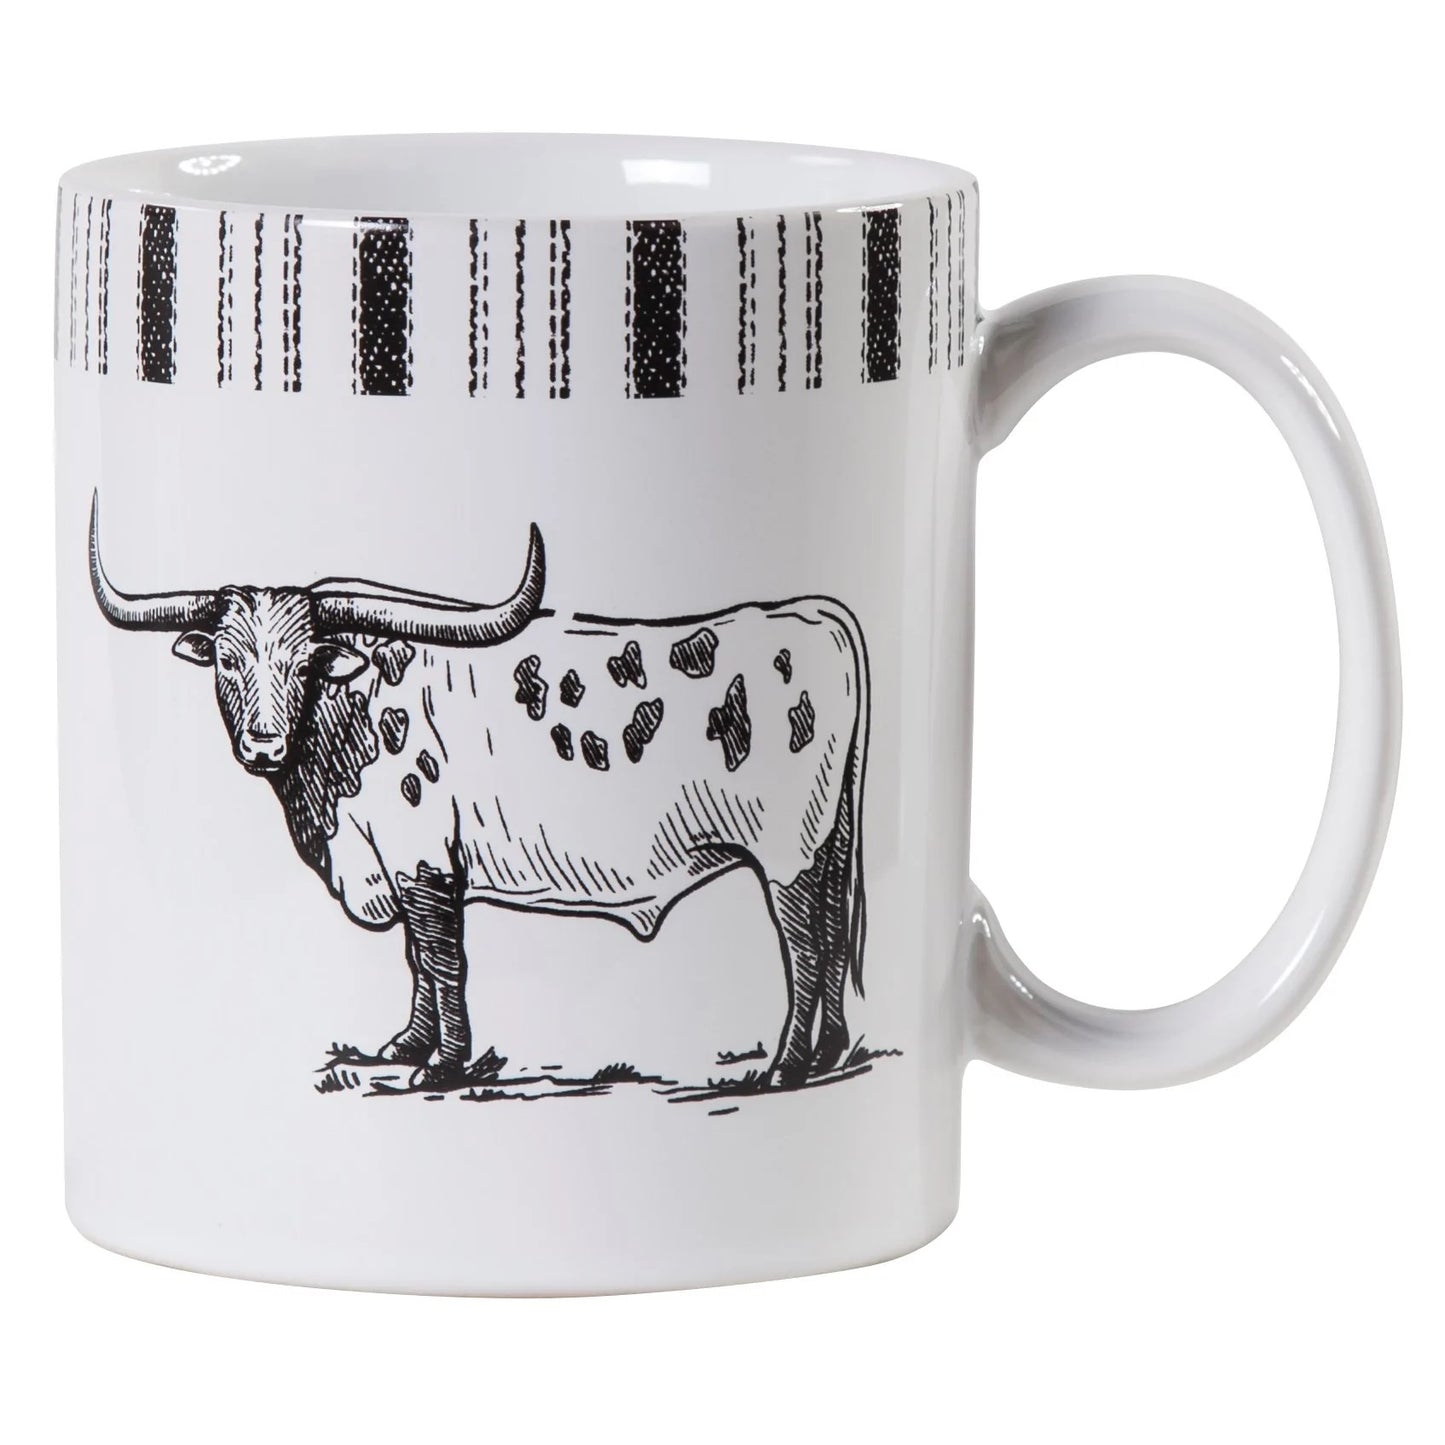 The Ranch Life Longhorn Mug (two colors)